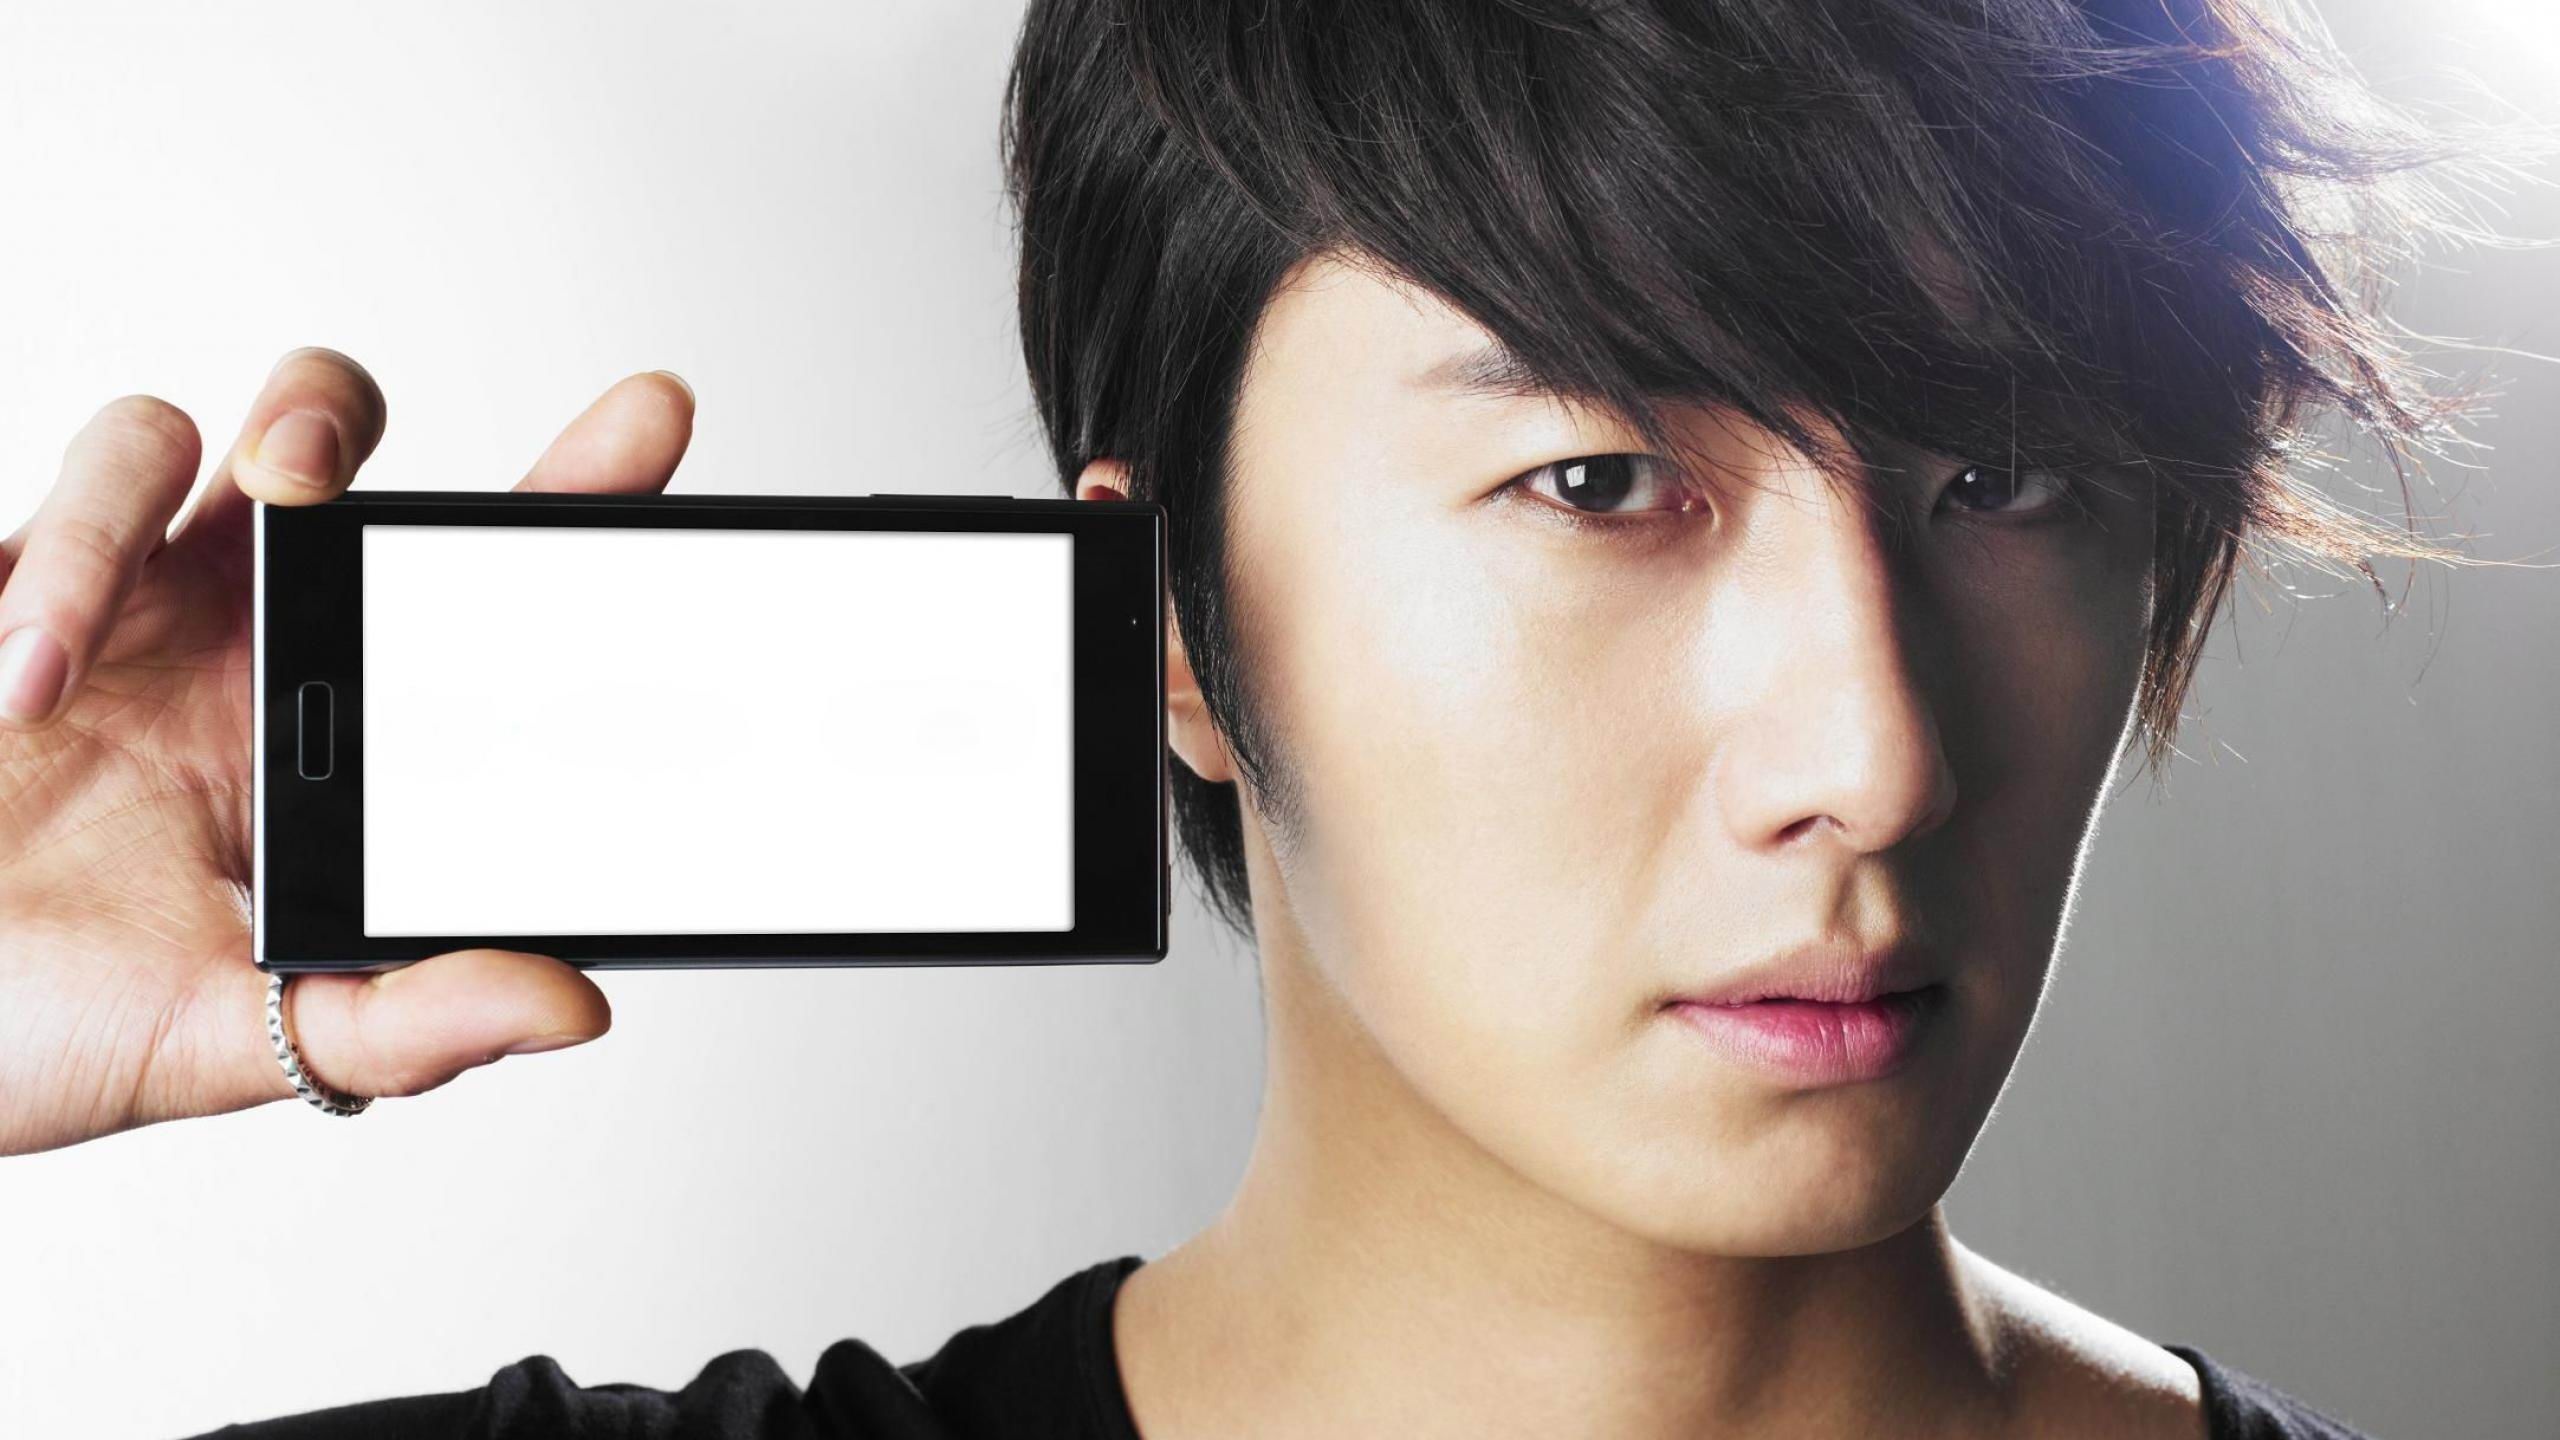 Men Smartphone Jung Il Woo Actor Asian Korean People